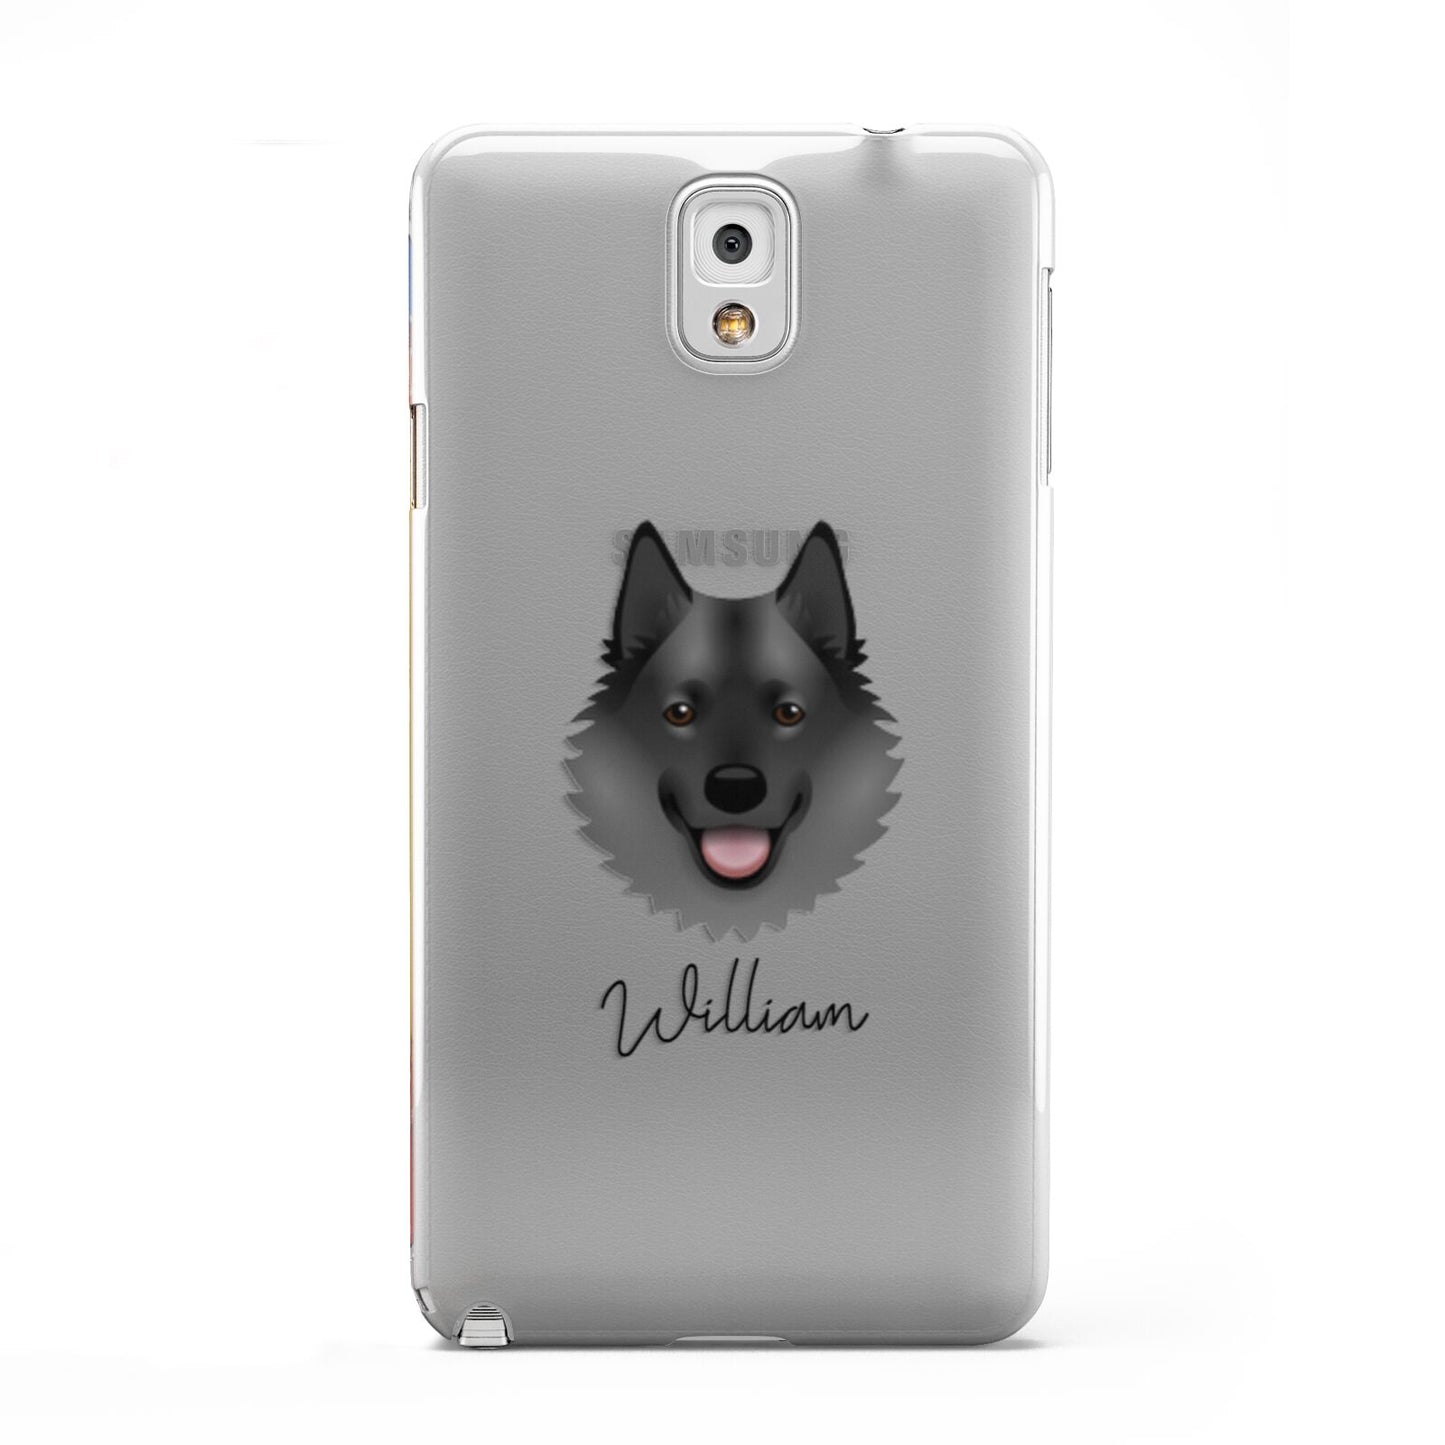 Norwegian Elkhound Personalised Samsung Galaxy Note 3 Case